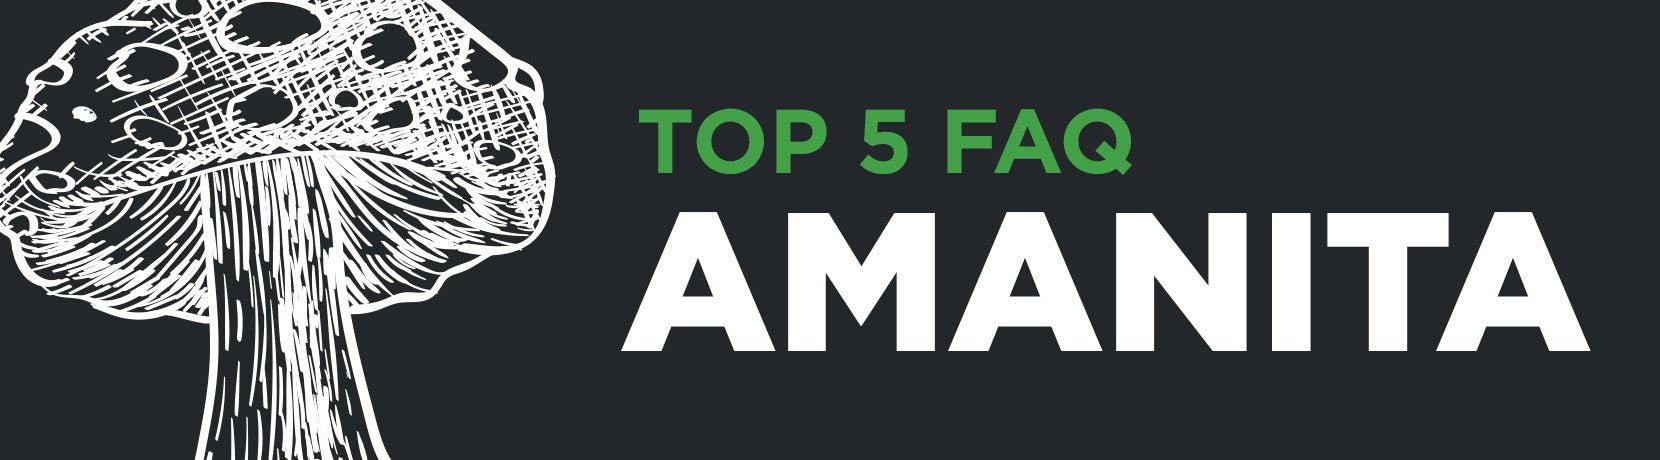 Top 5 FAQs for Amanita Muscaria - Shop CBD Kratom